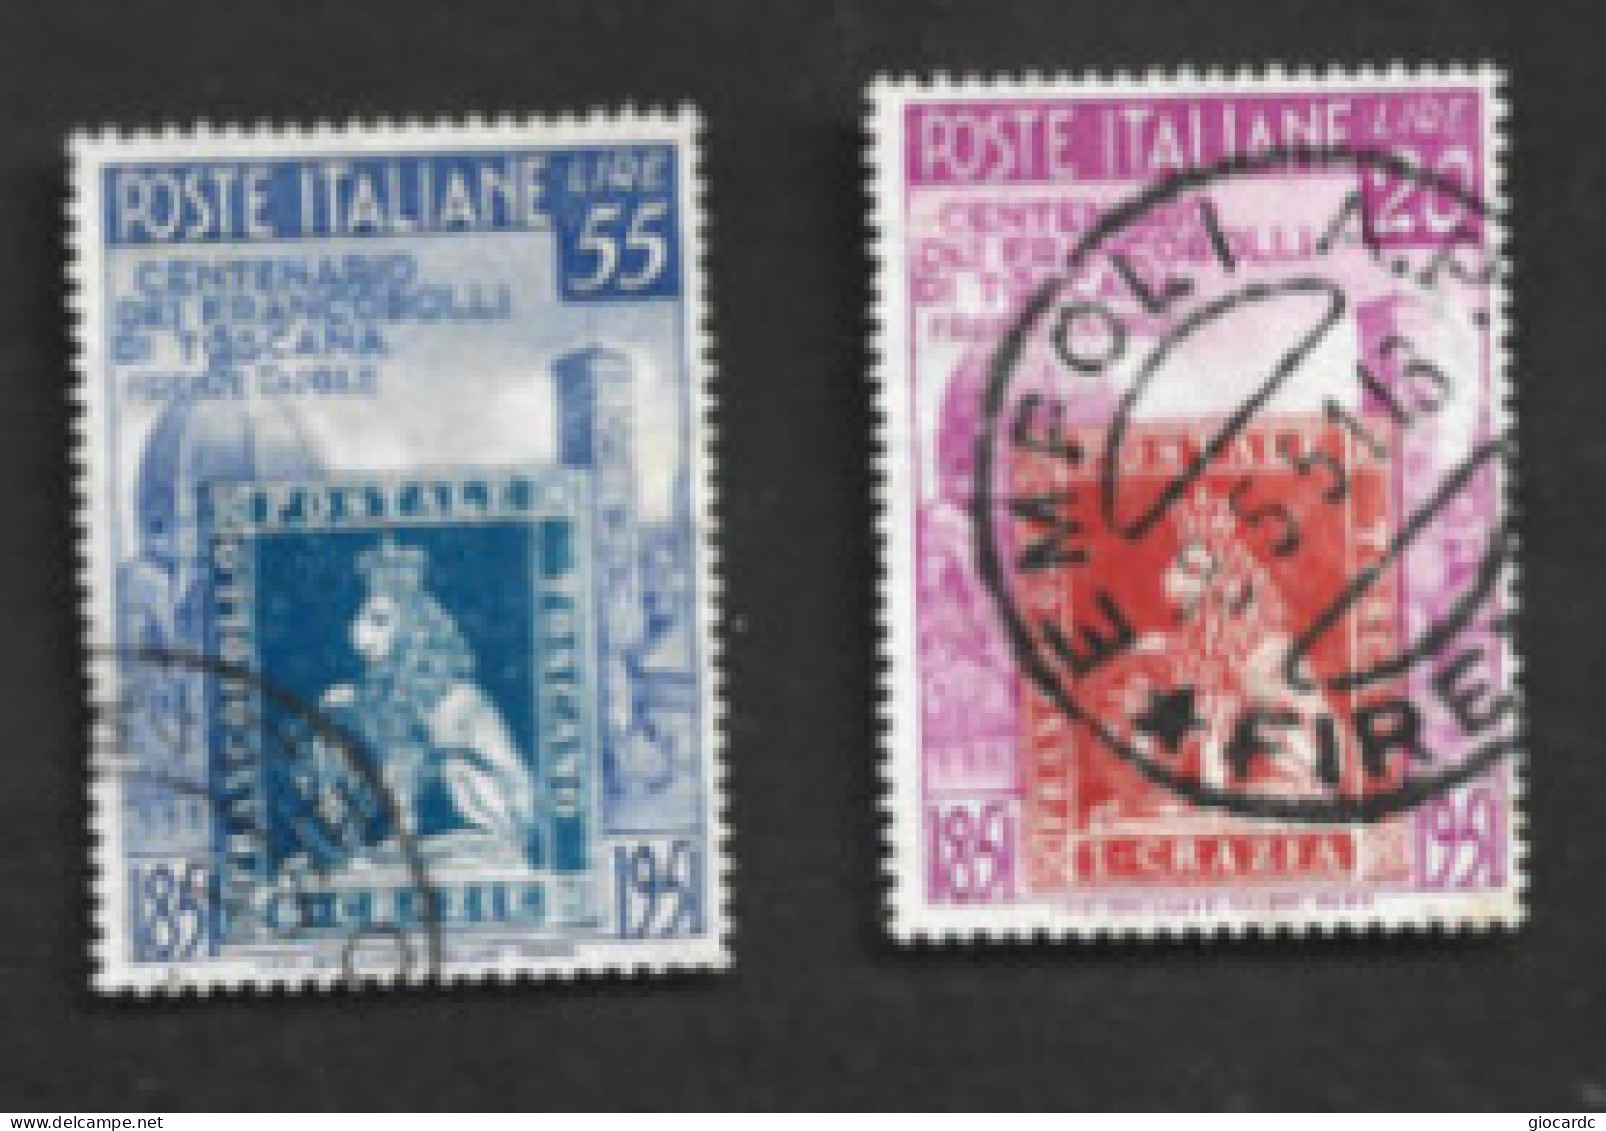 ITALIA REPUBBLICA  -  UNIF. 653.654  - 1951 100^ ANNIV. FRANCOBOLLI DI TOSCANA     - USATI° (USED) - 1946-60: Oblitérés